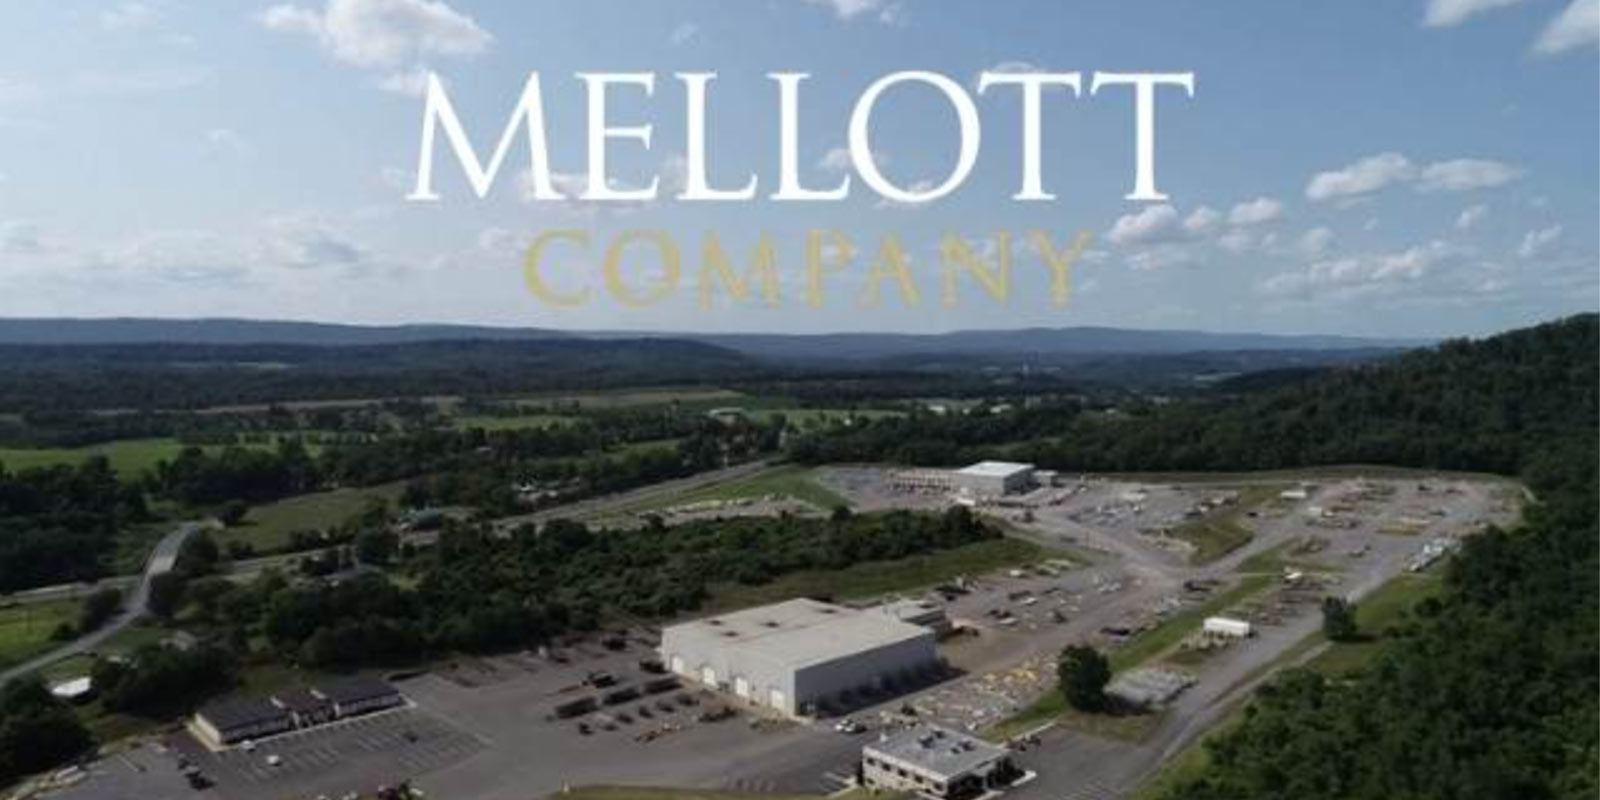 aerial view of mellott company with company logo